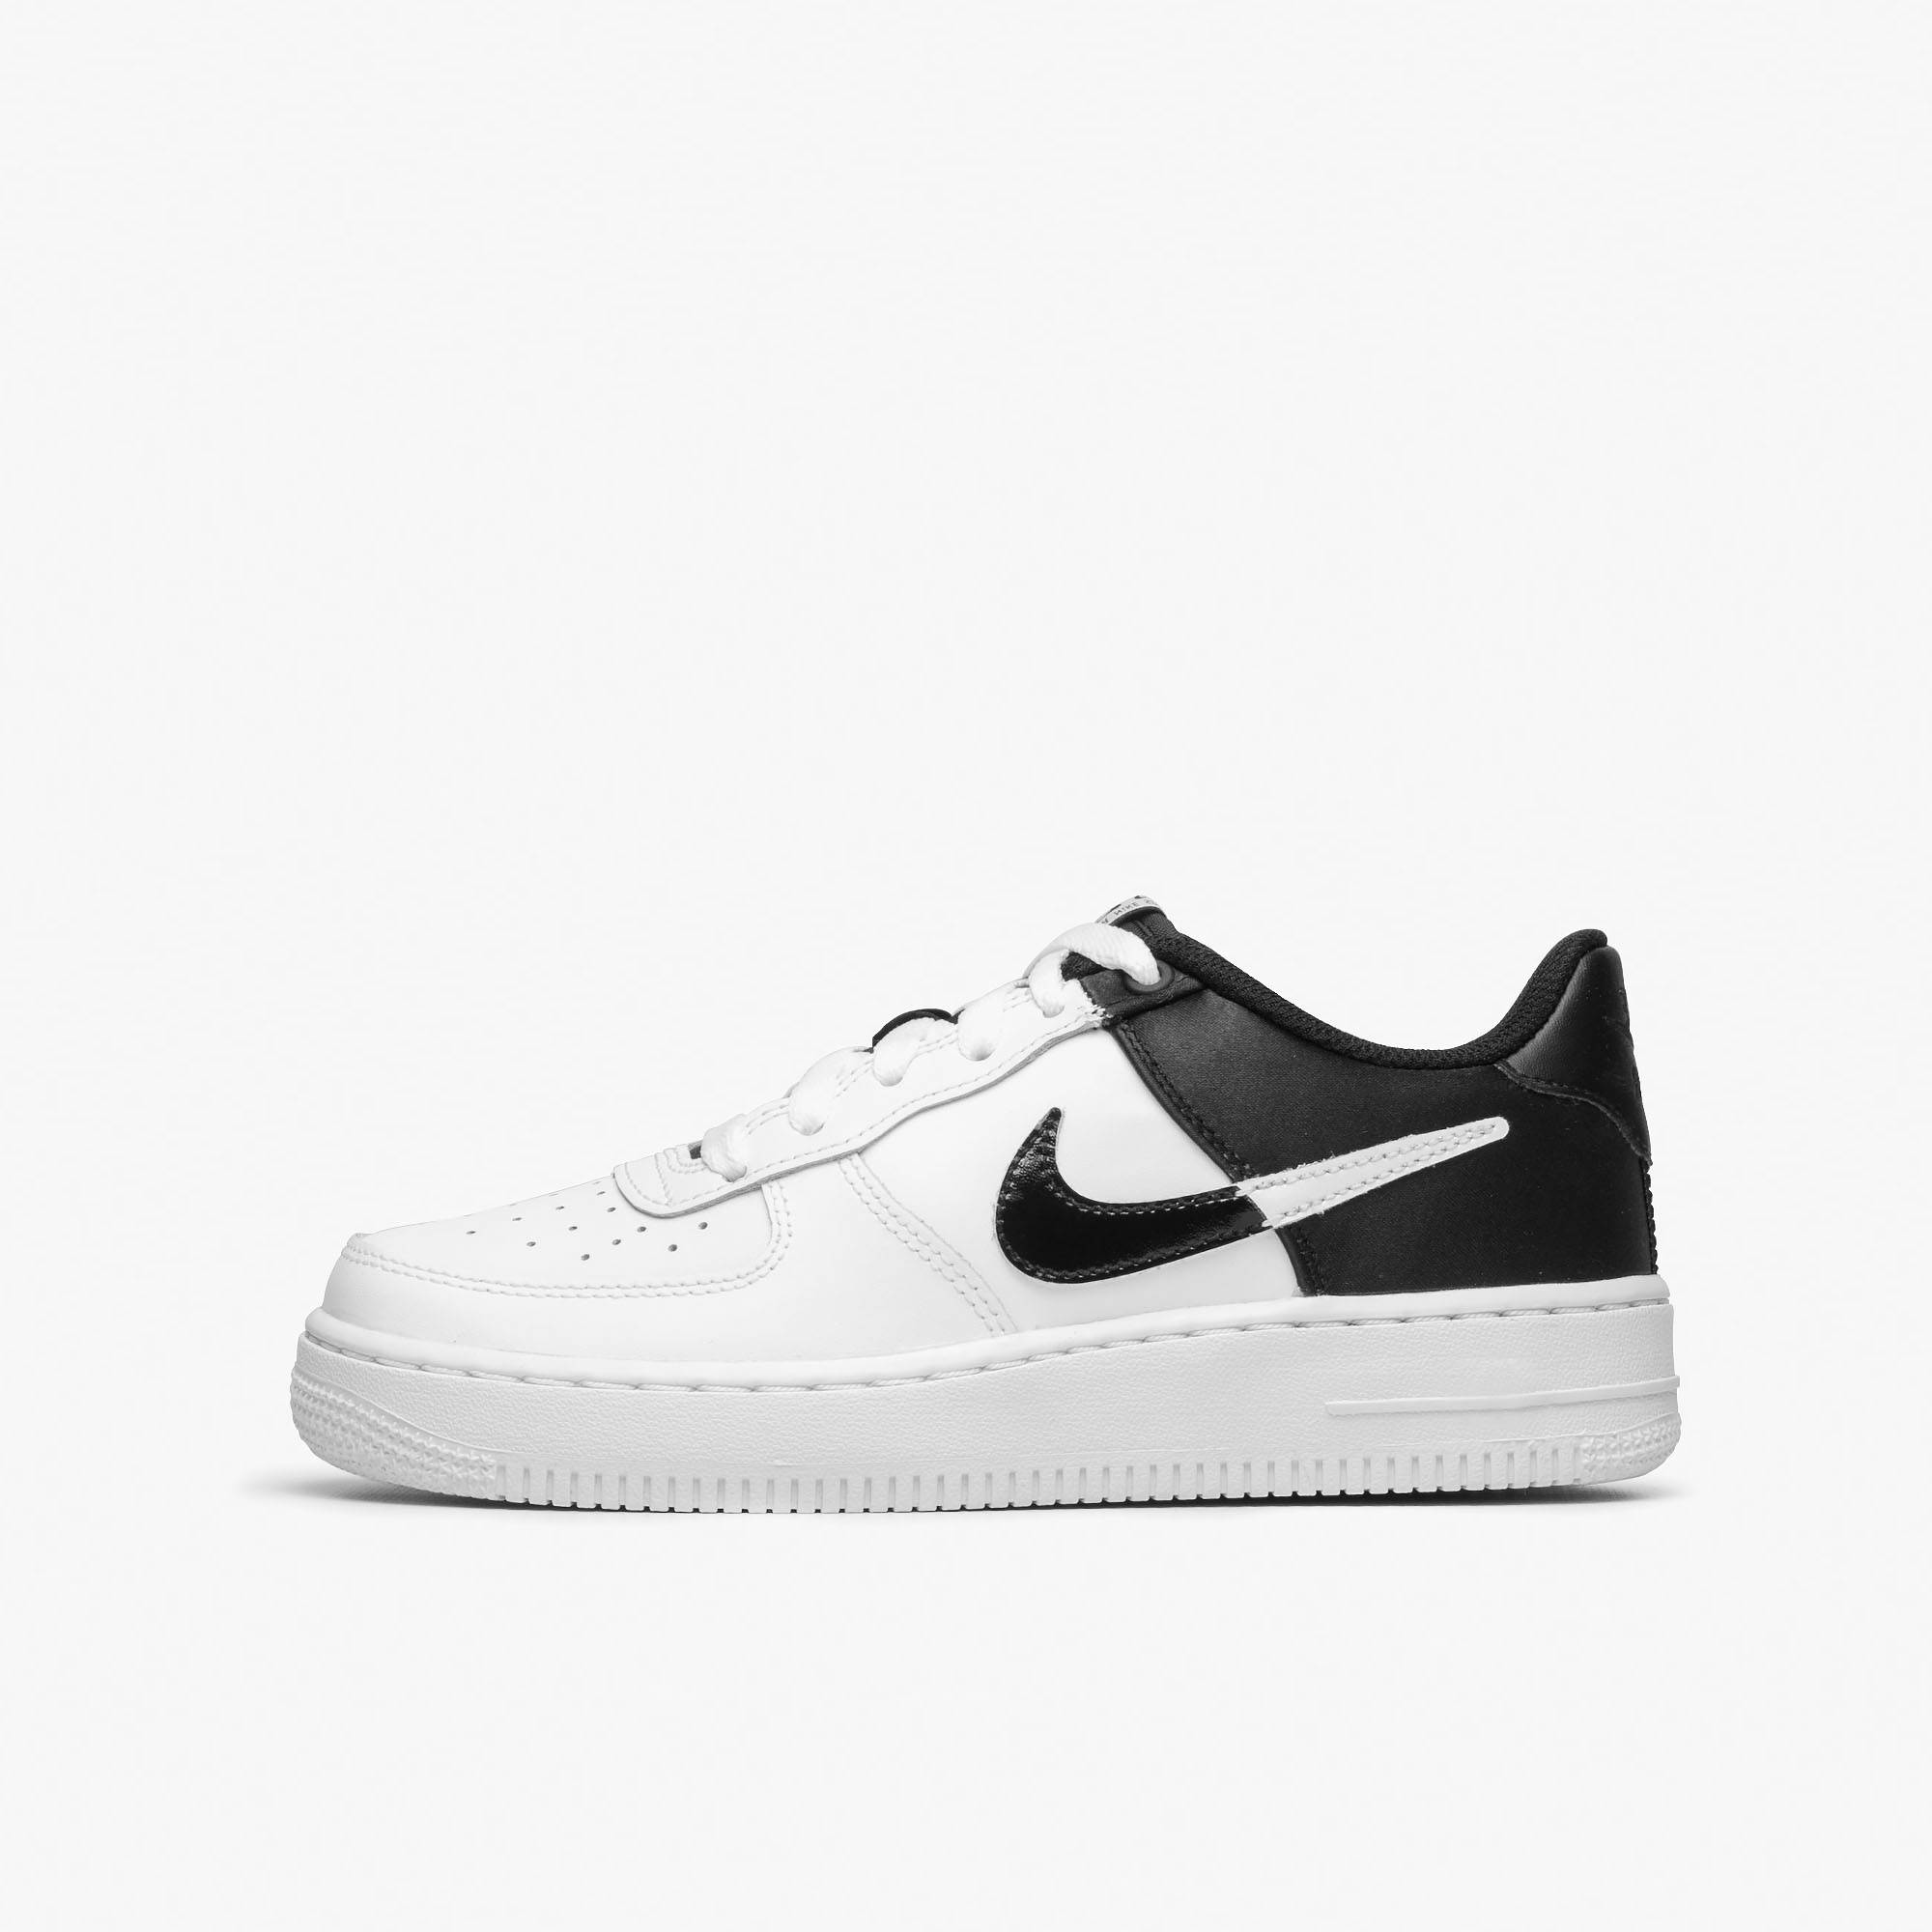 nike air blanco y negro Nike online – Compra productos Nike baratos